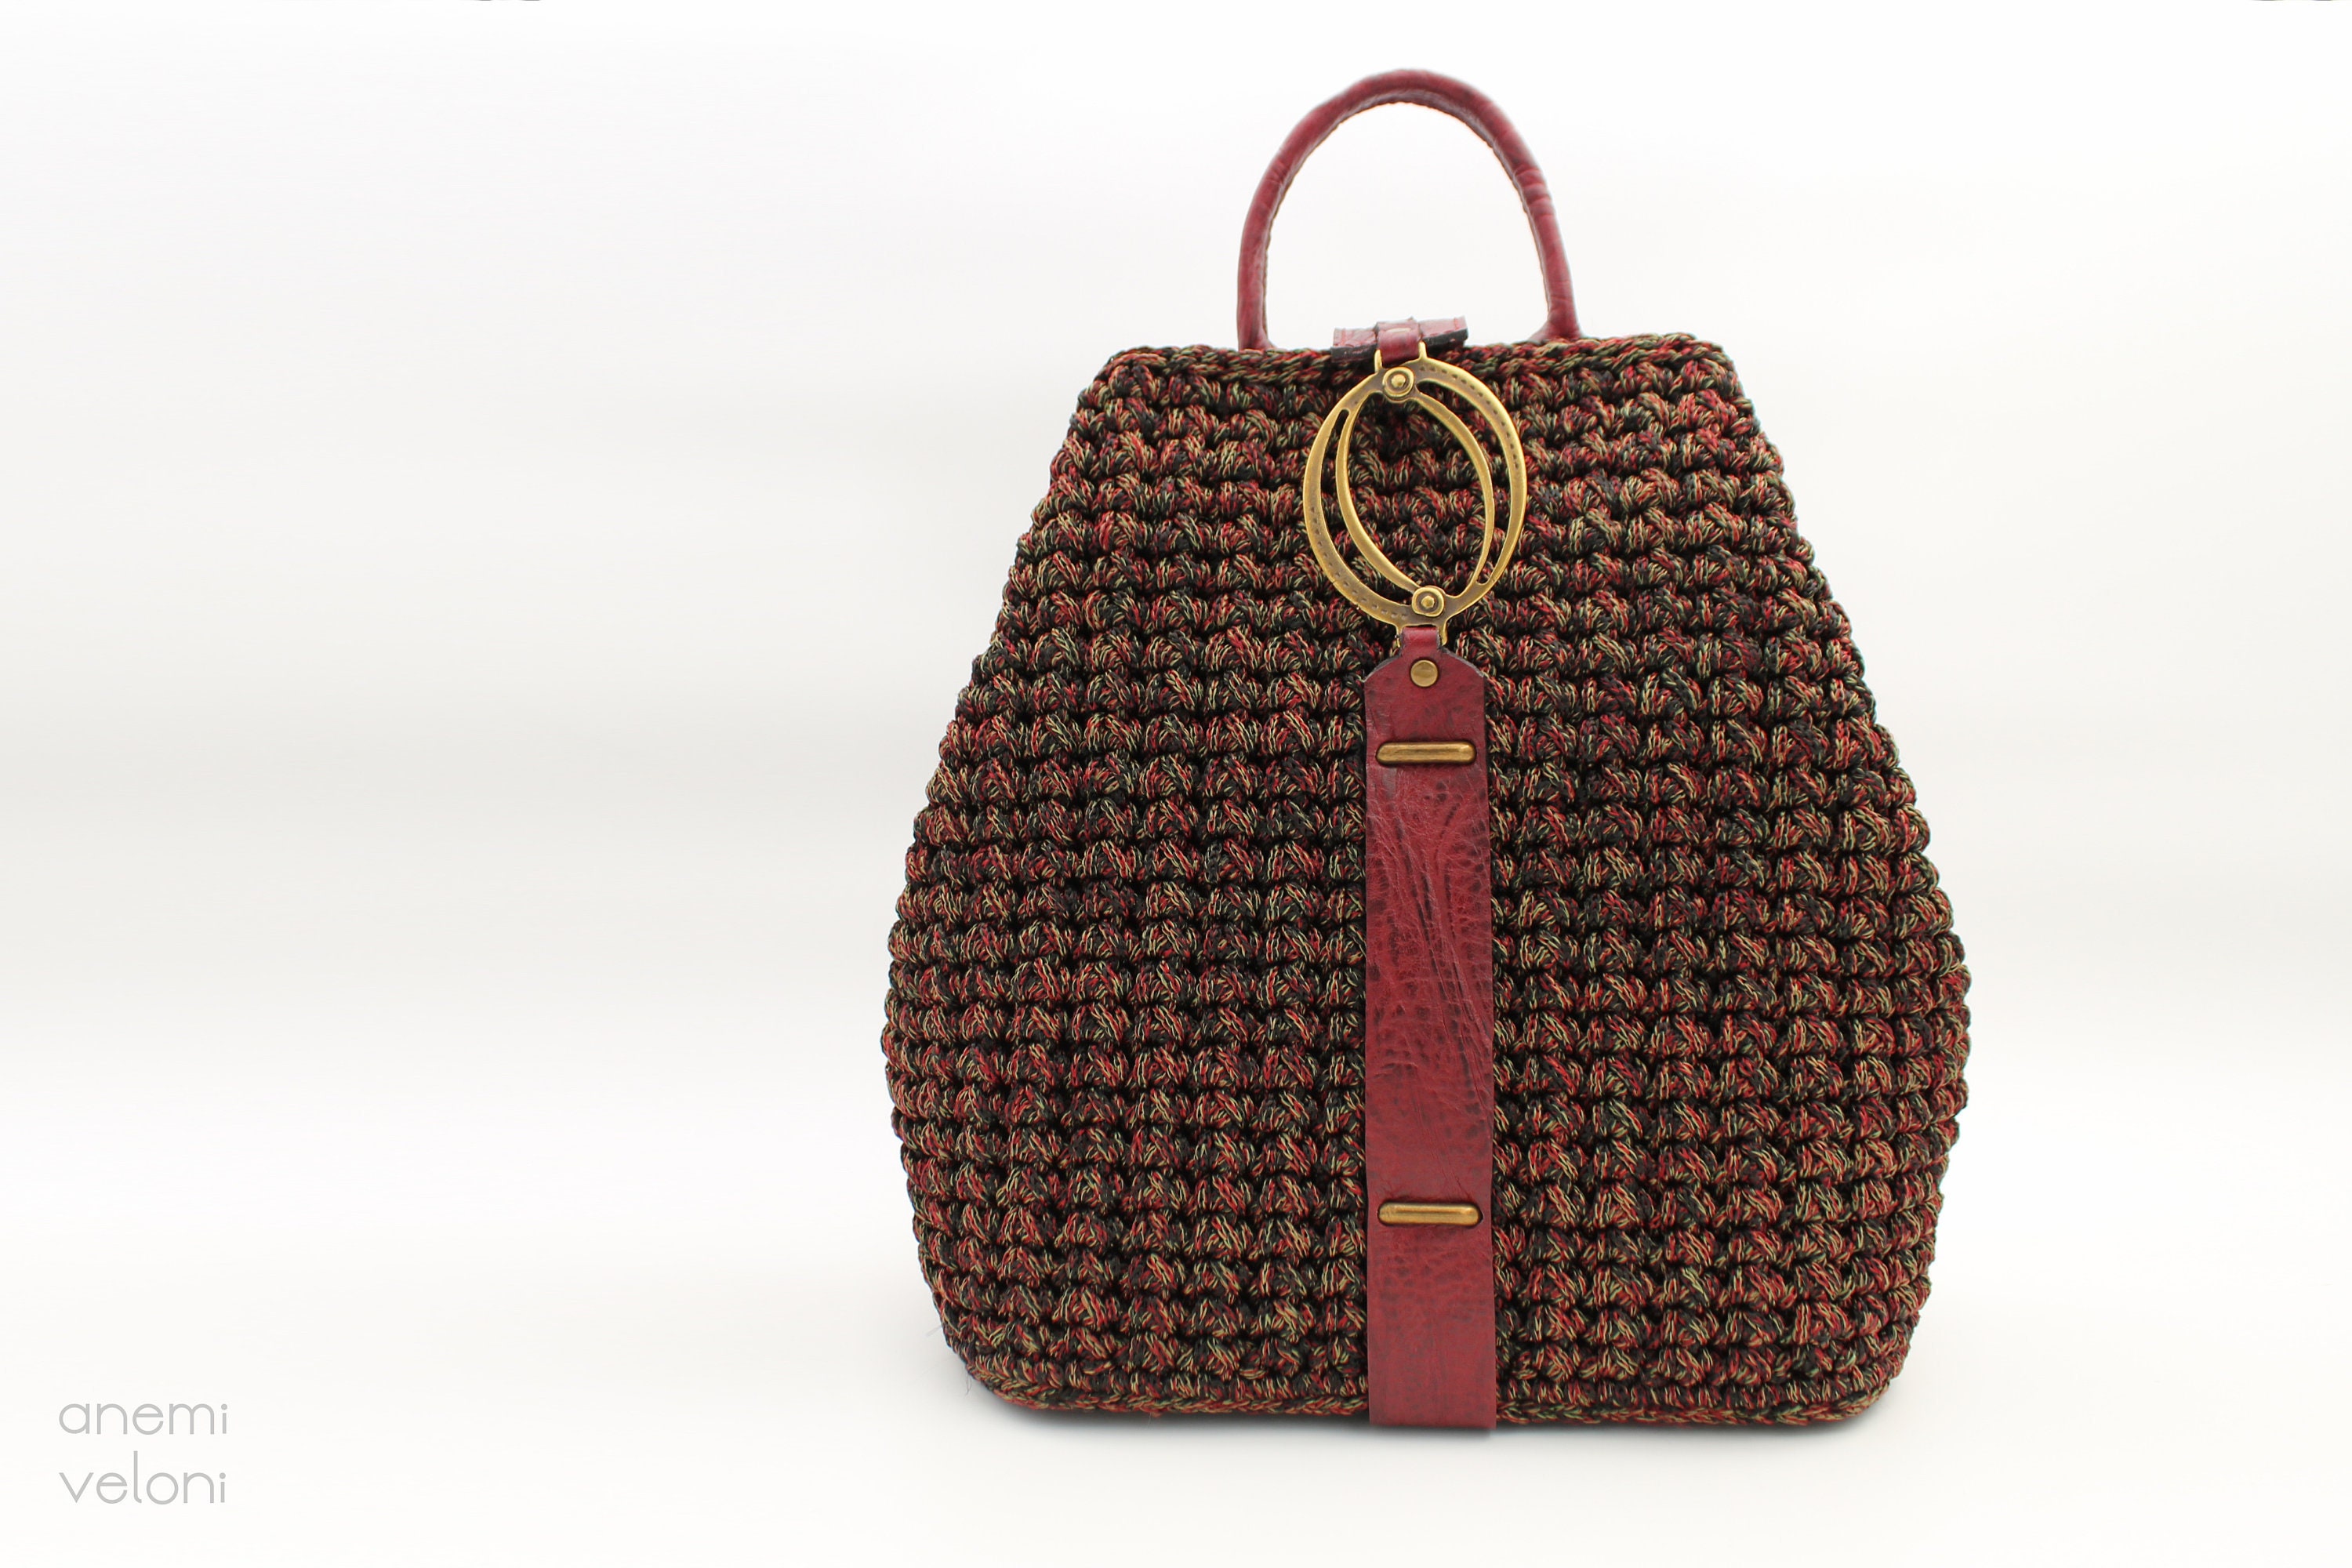 Luxury Bag Collection #women'spursesandhandbags